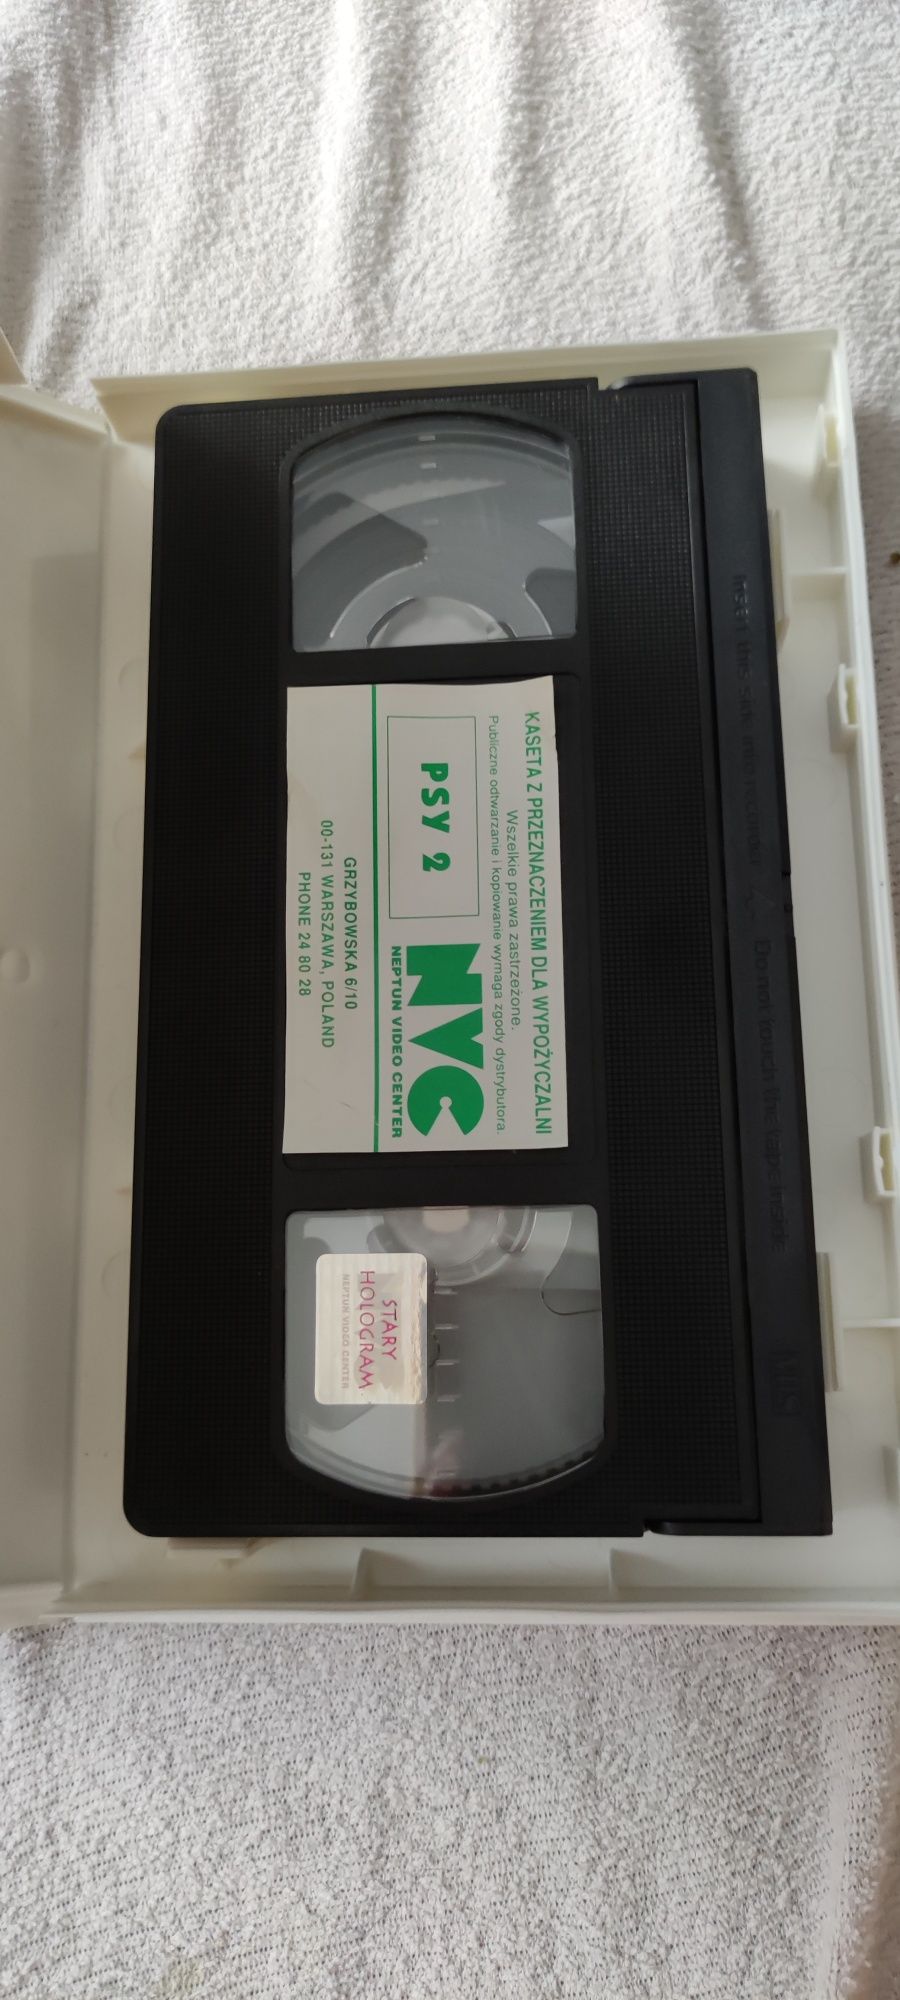 Używane kasety VHS psy 2 części